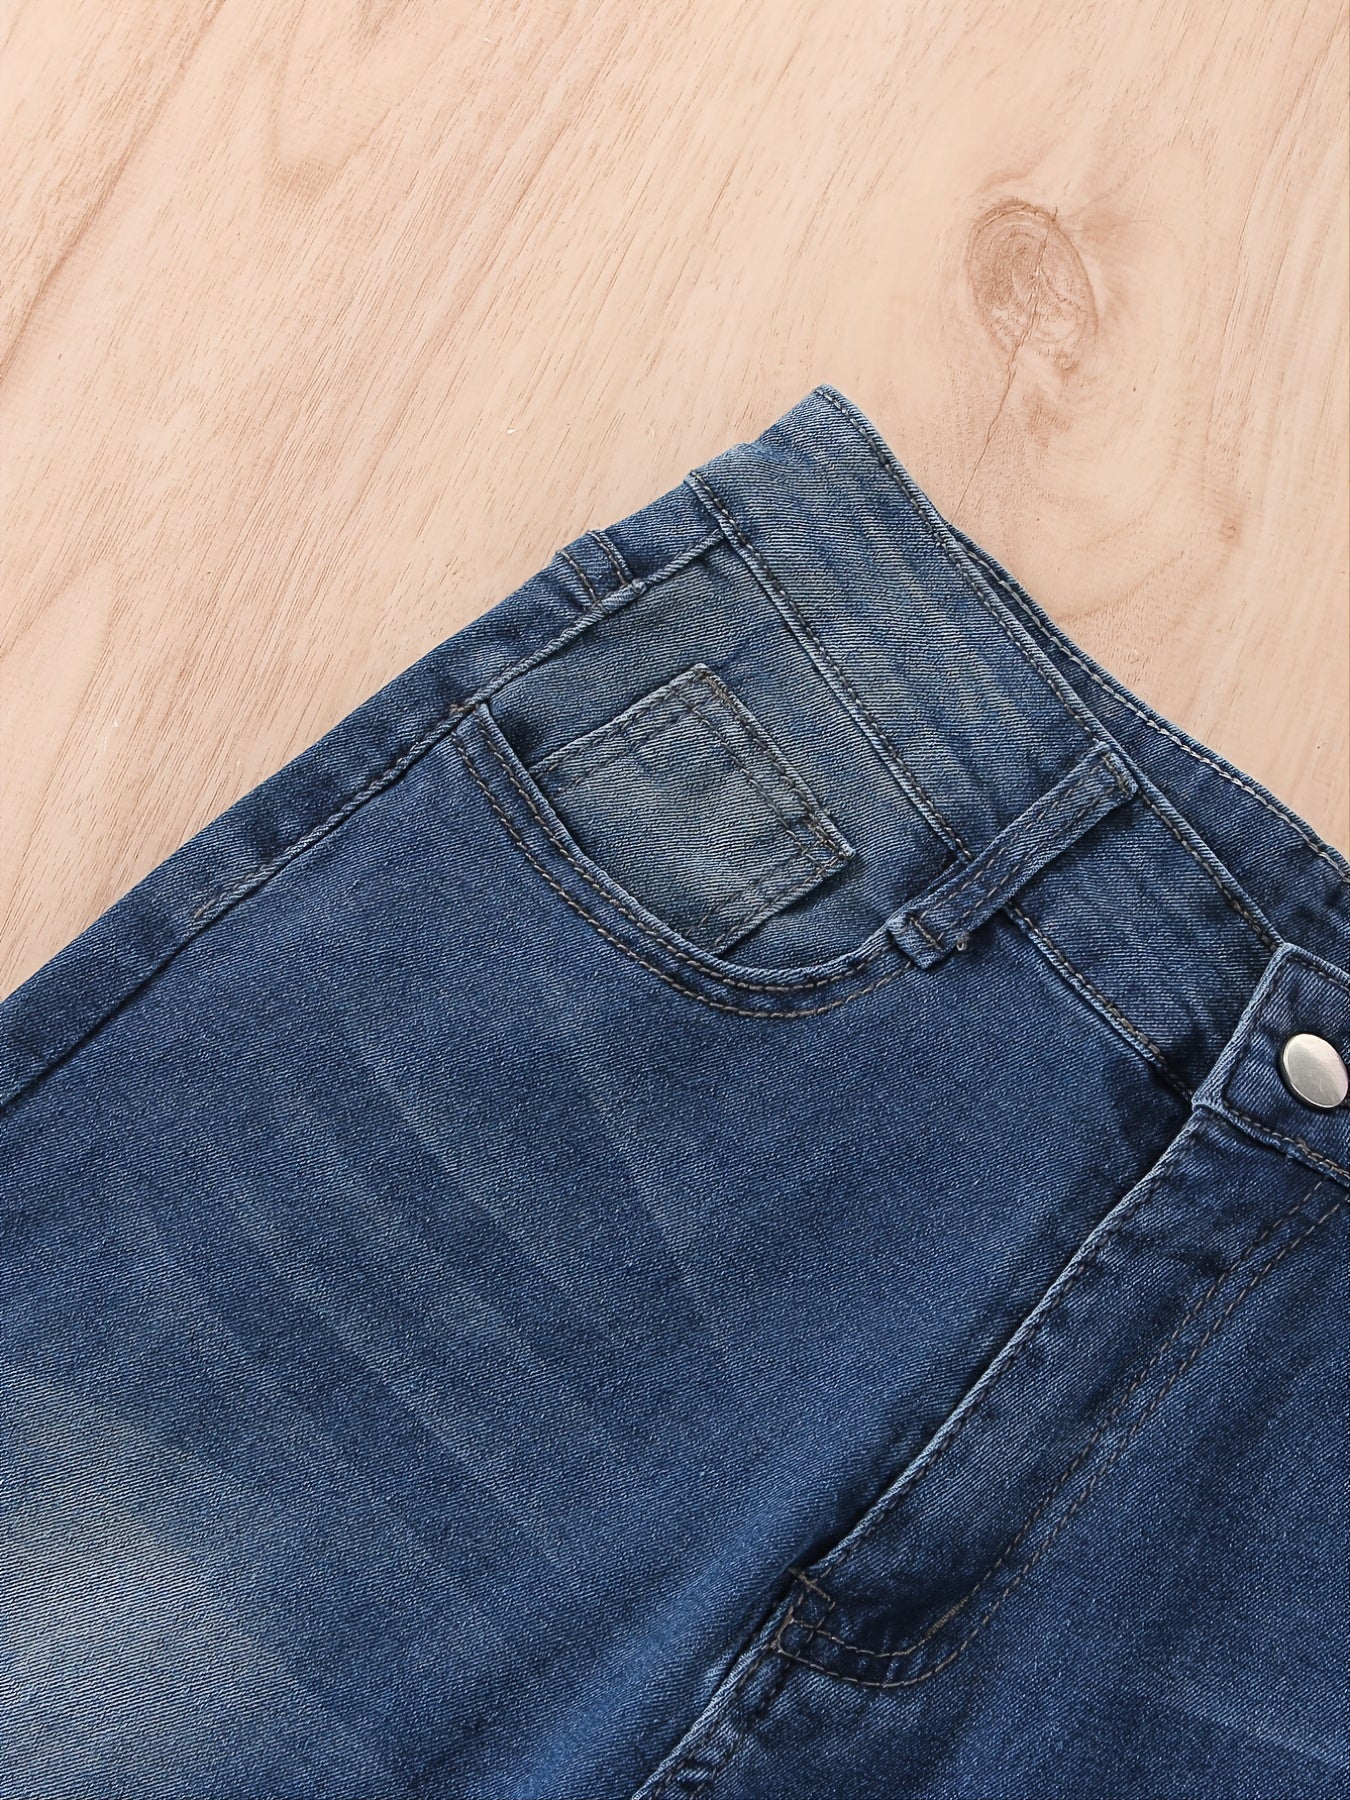 「lovevop」Solid Bell Bottom Jeans, Washed Blue Flare Leg Denim Pants, Women's Denim Trousers